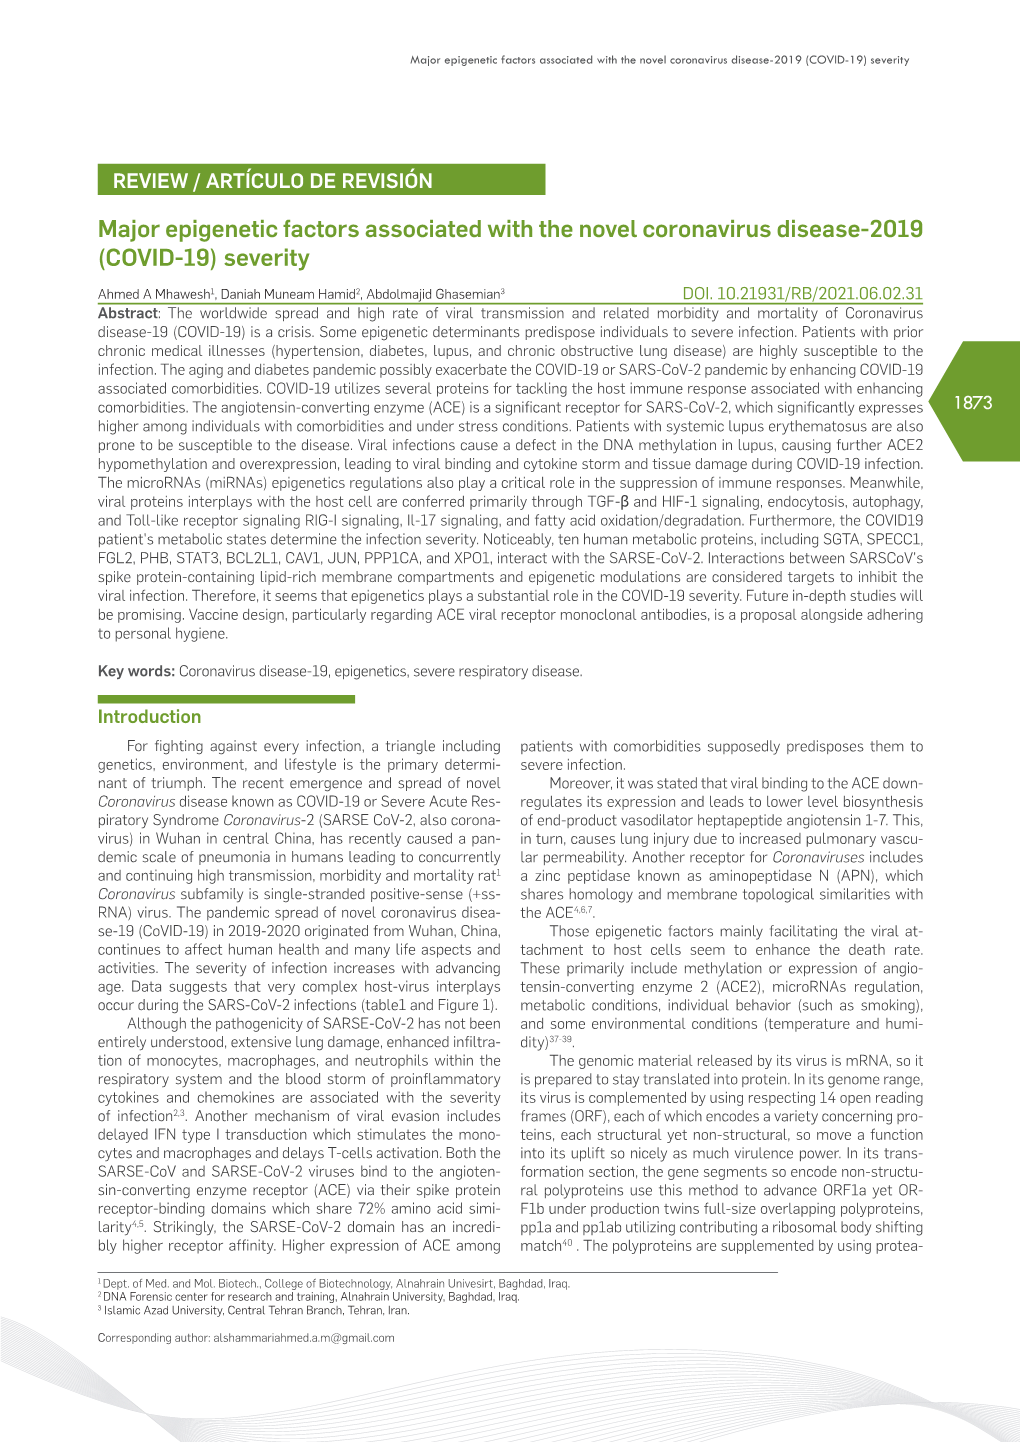 Major Epigenetic Factors Associated with the Novel Coronavirus Disease-2019 (COVID-19) Severity